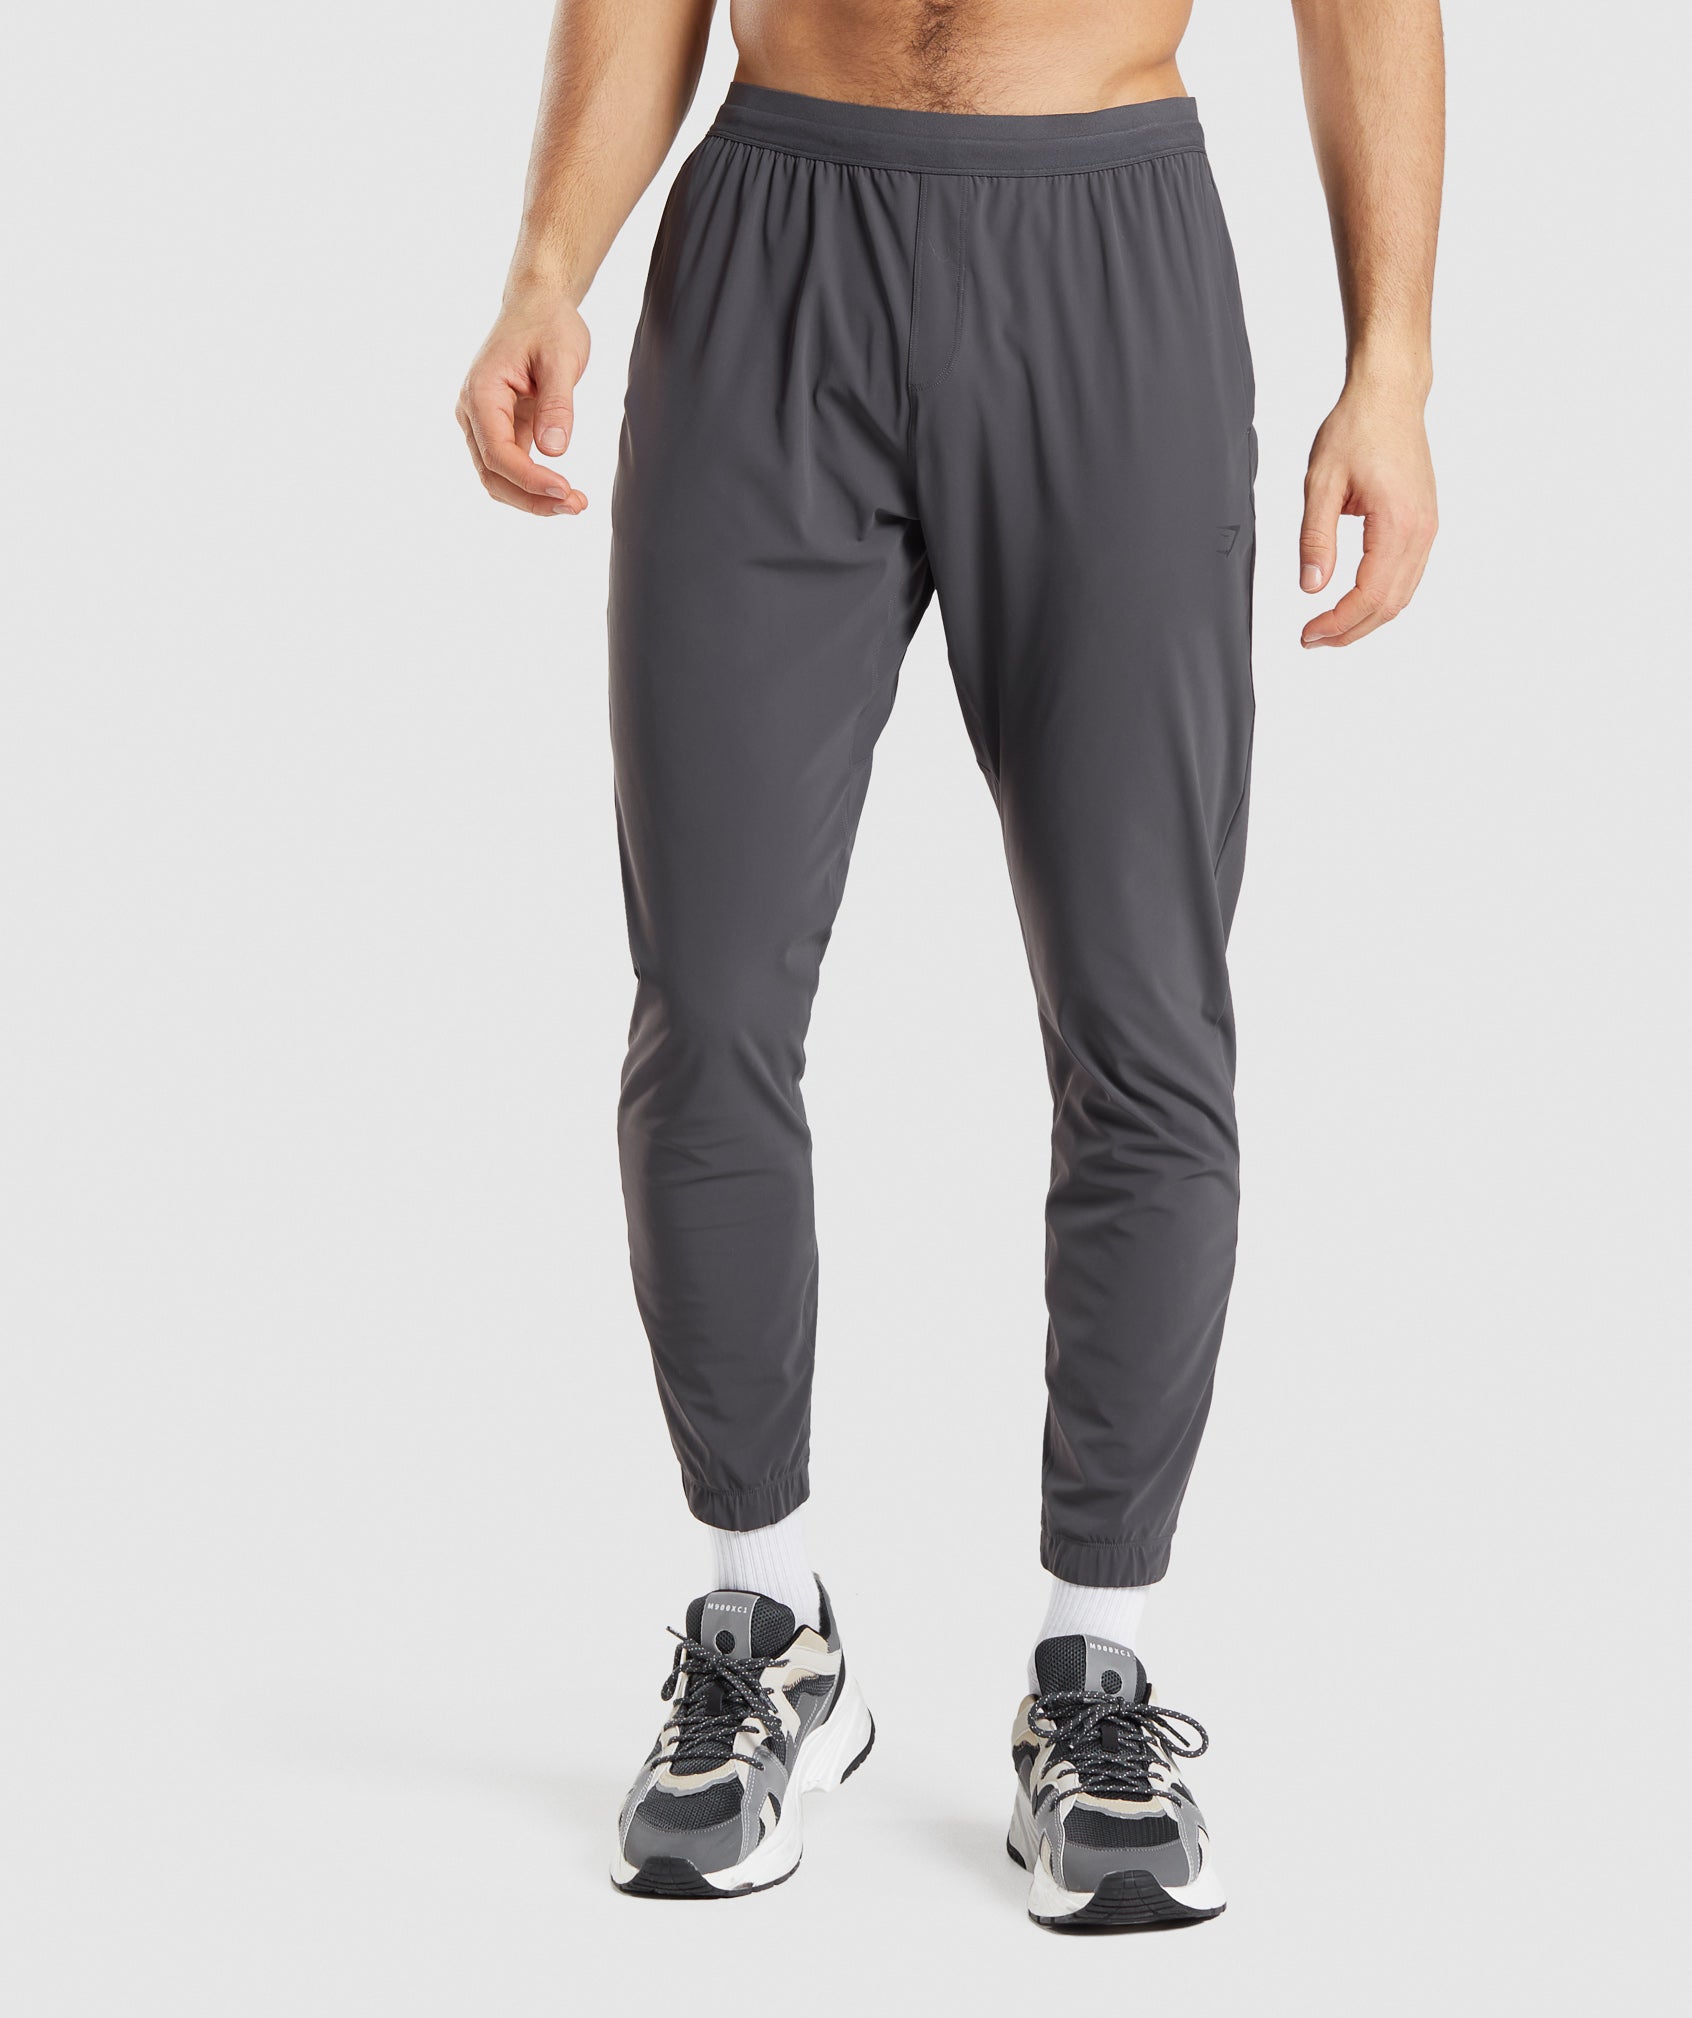 Gymshark on X: GymShark Fit Hooded Top - Grey/Graphite GymShark Fit  Tapered Bottoms - Graphite #Gymshark  / X